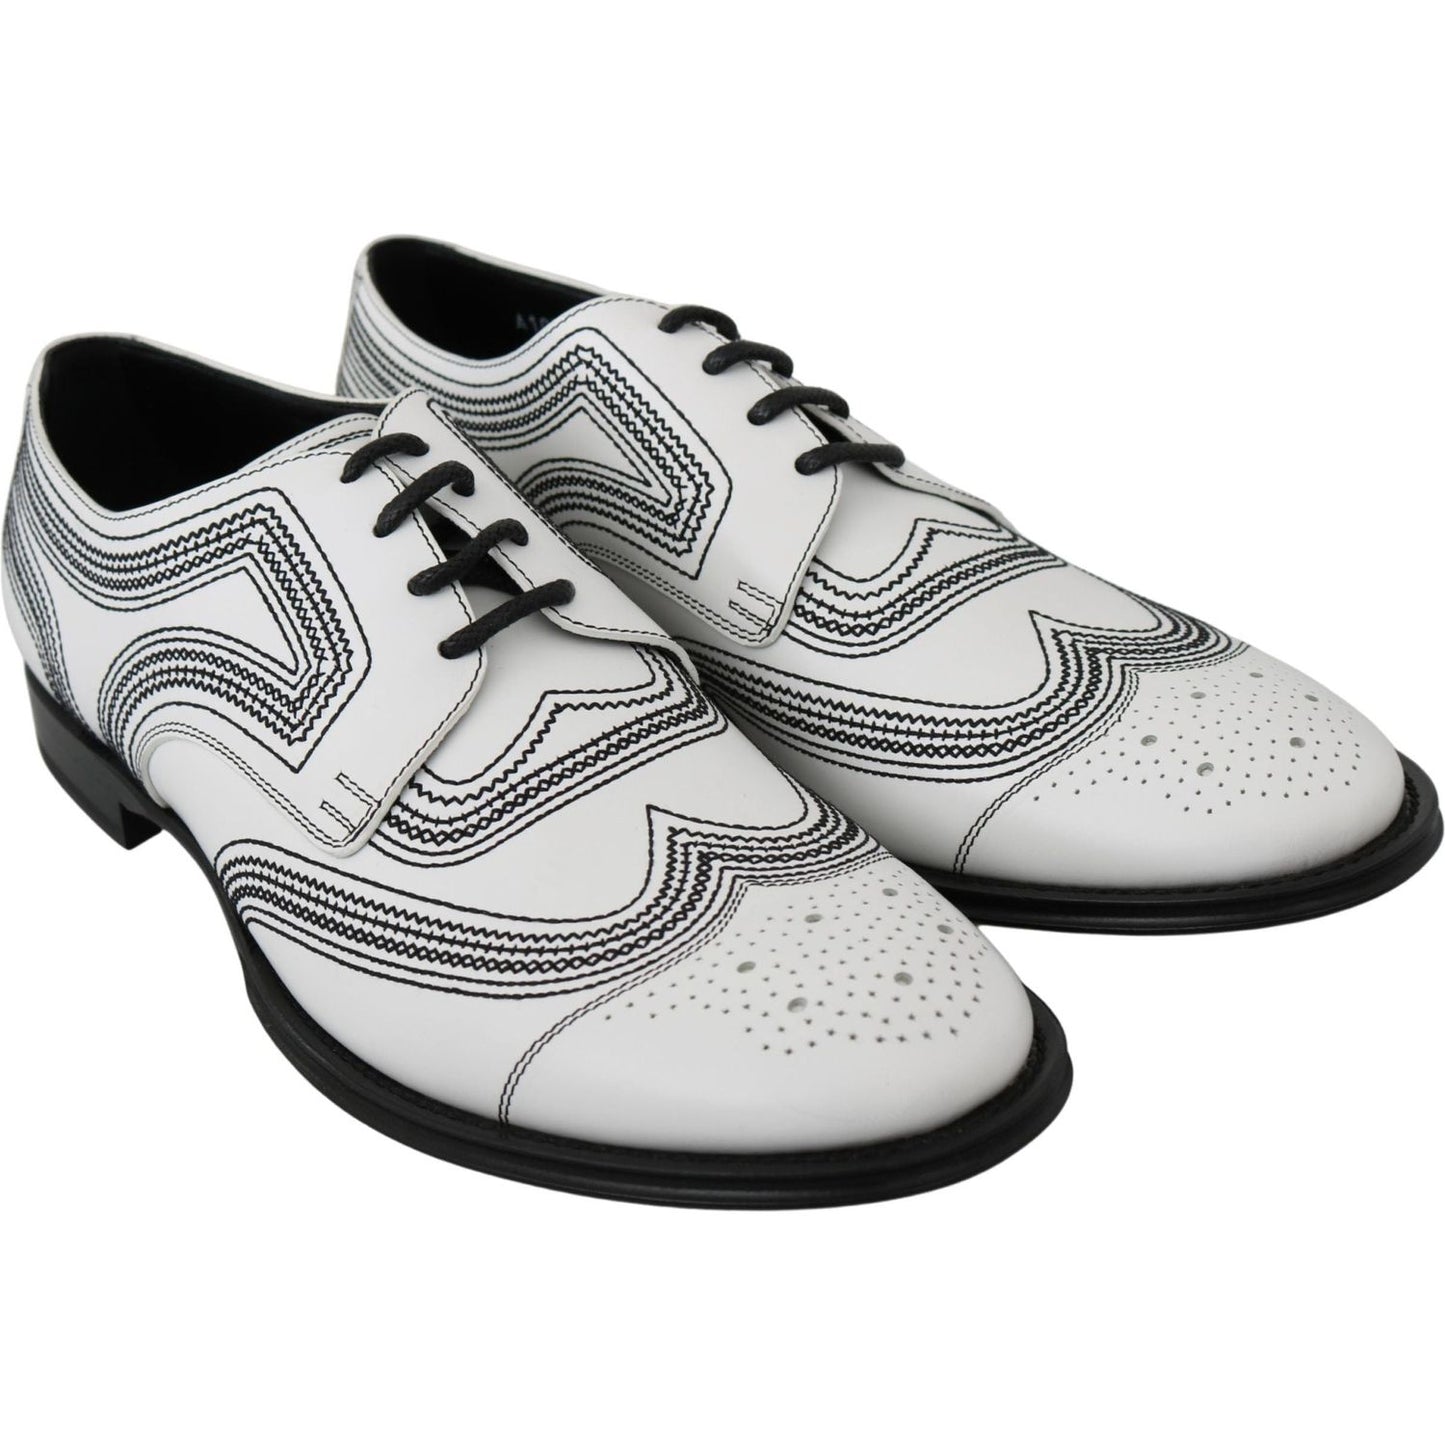 Dolce & Gabbana Elegant White Leather Derby Shoes white-leather-derby-formal-black-lace-shoes IMG_0071-3-scaled-974c8444-062.jpg